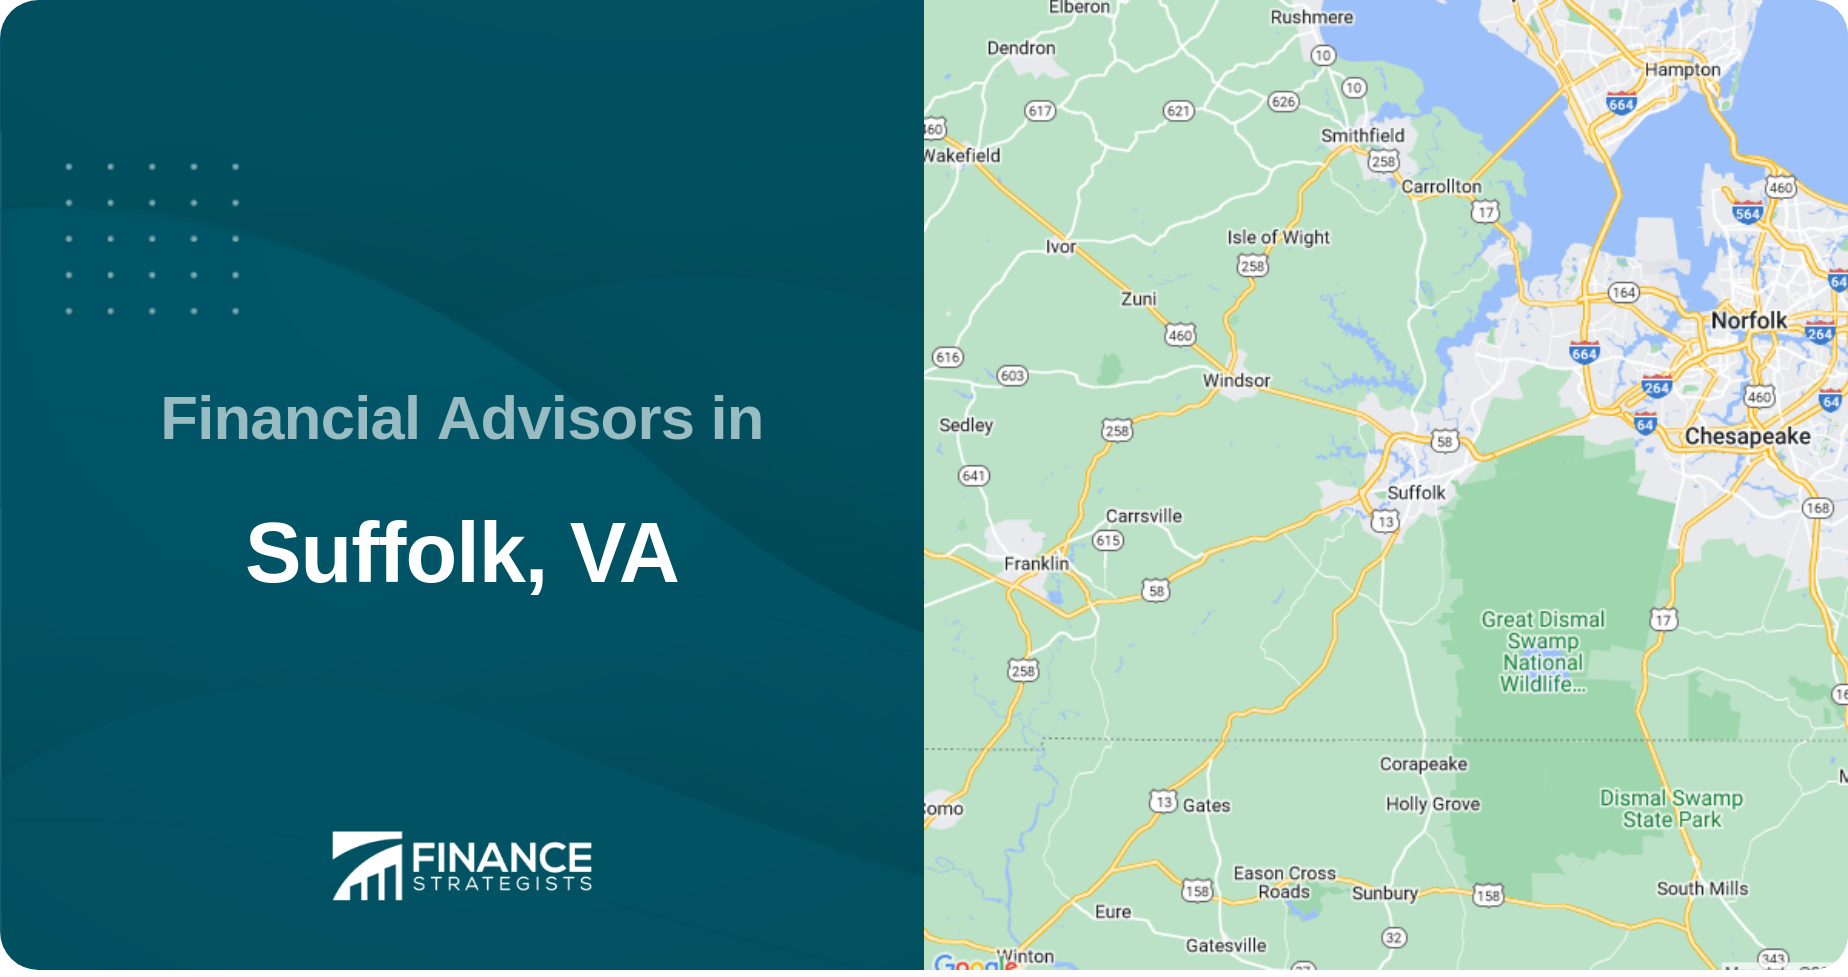 Financial Advisors in Suffolk, VA